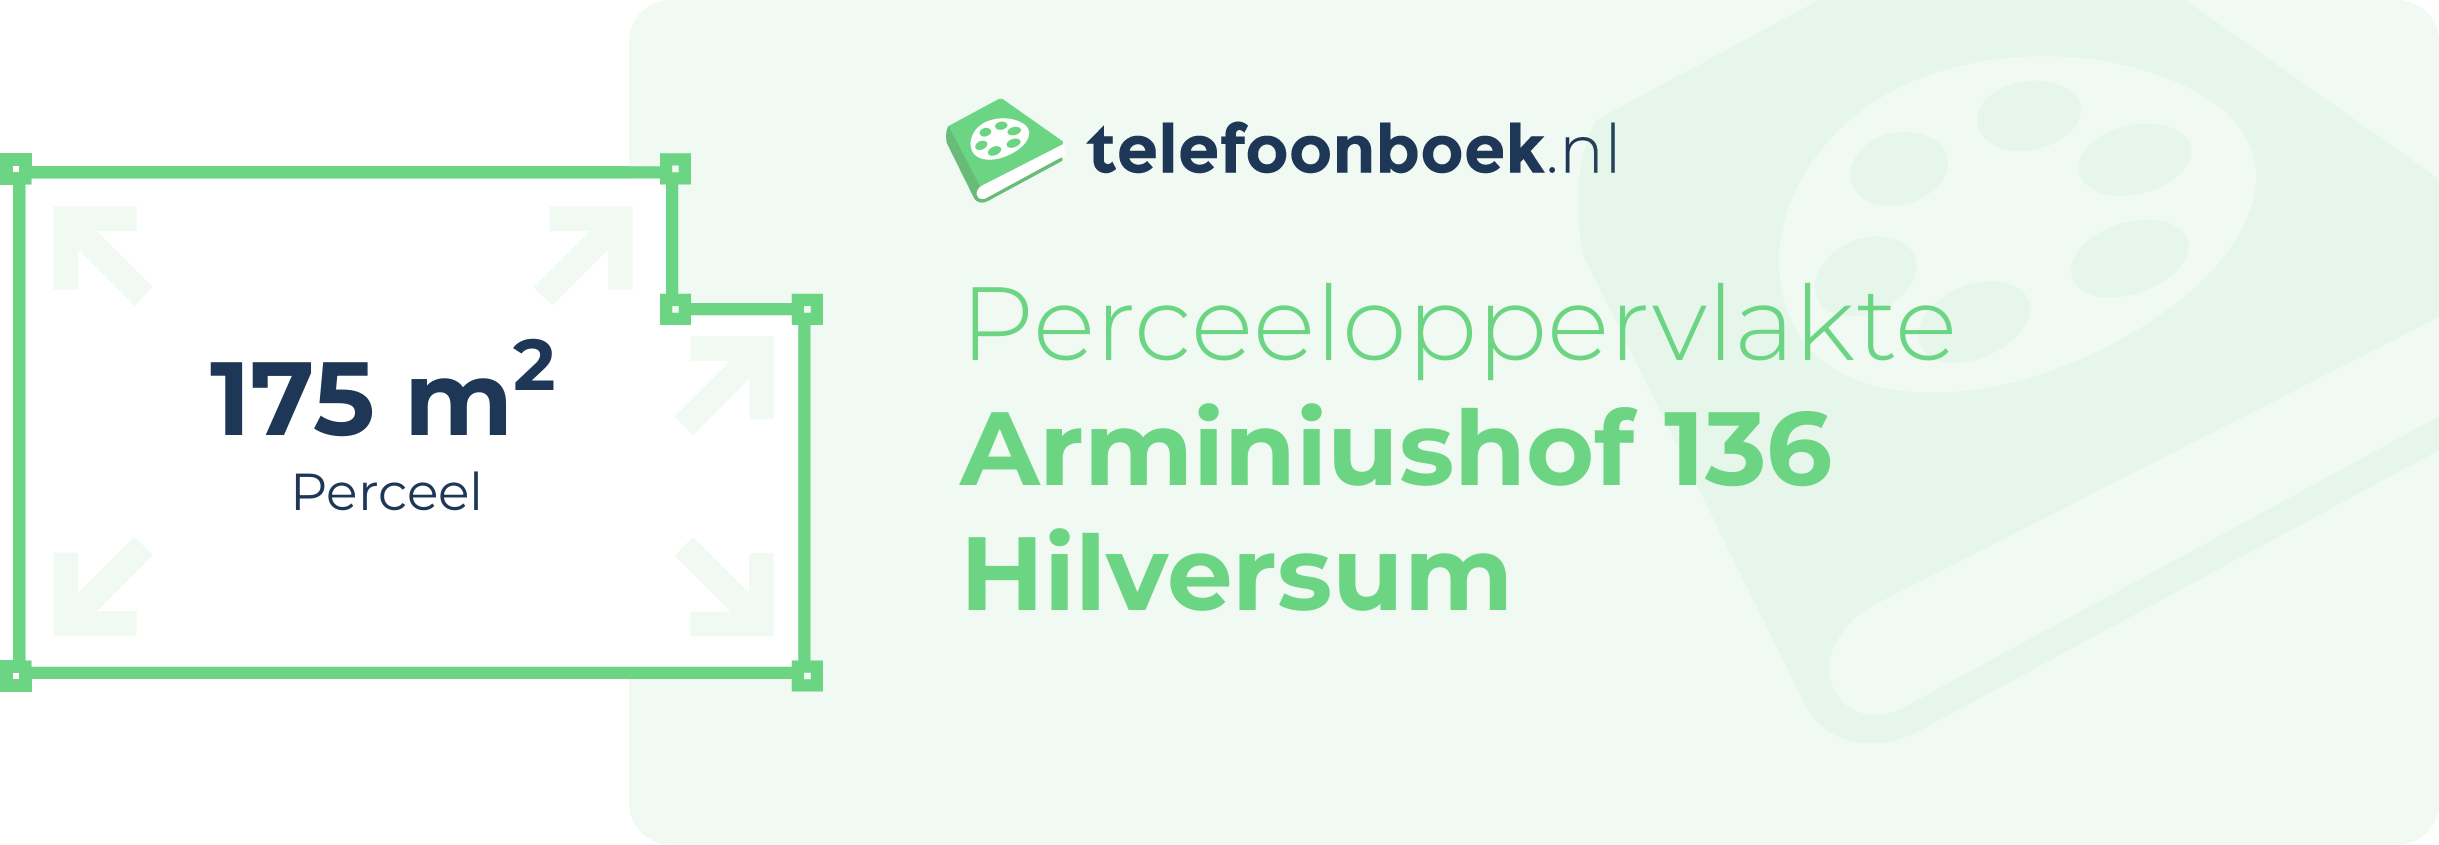 Perceeloppervlakte Arminiushof 136 Hilversum